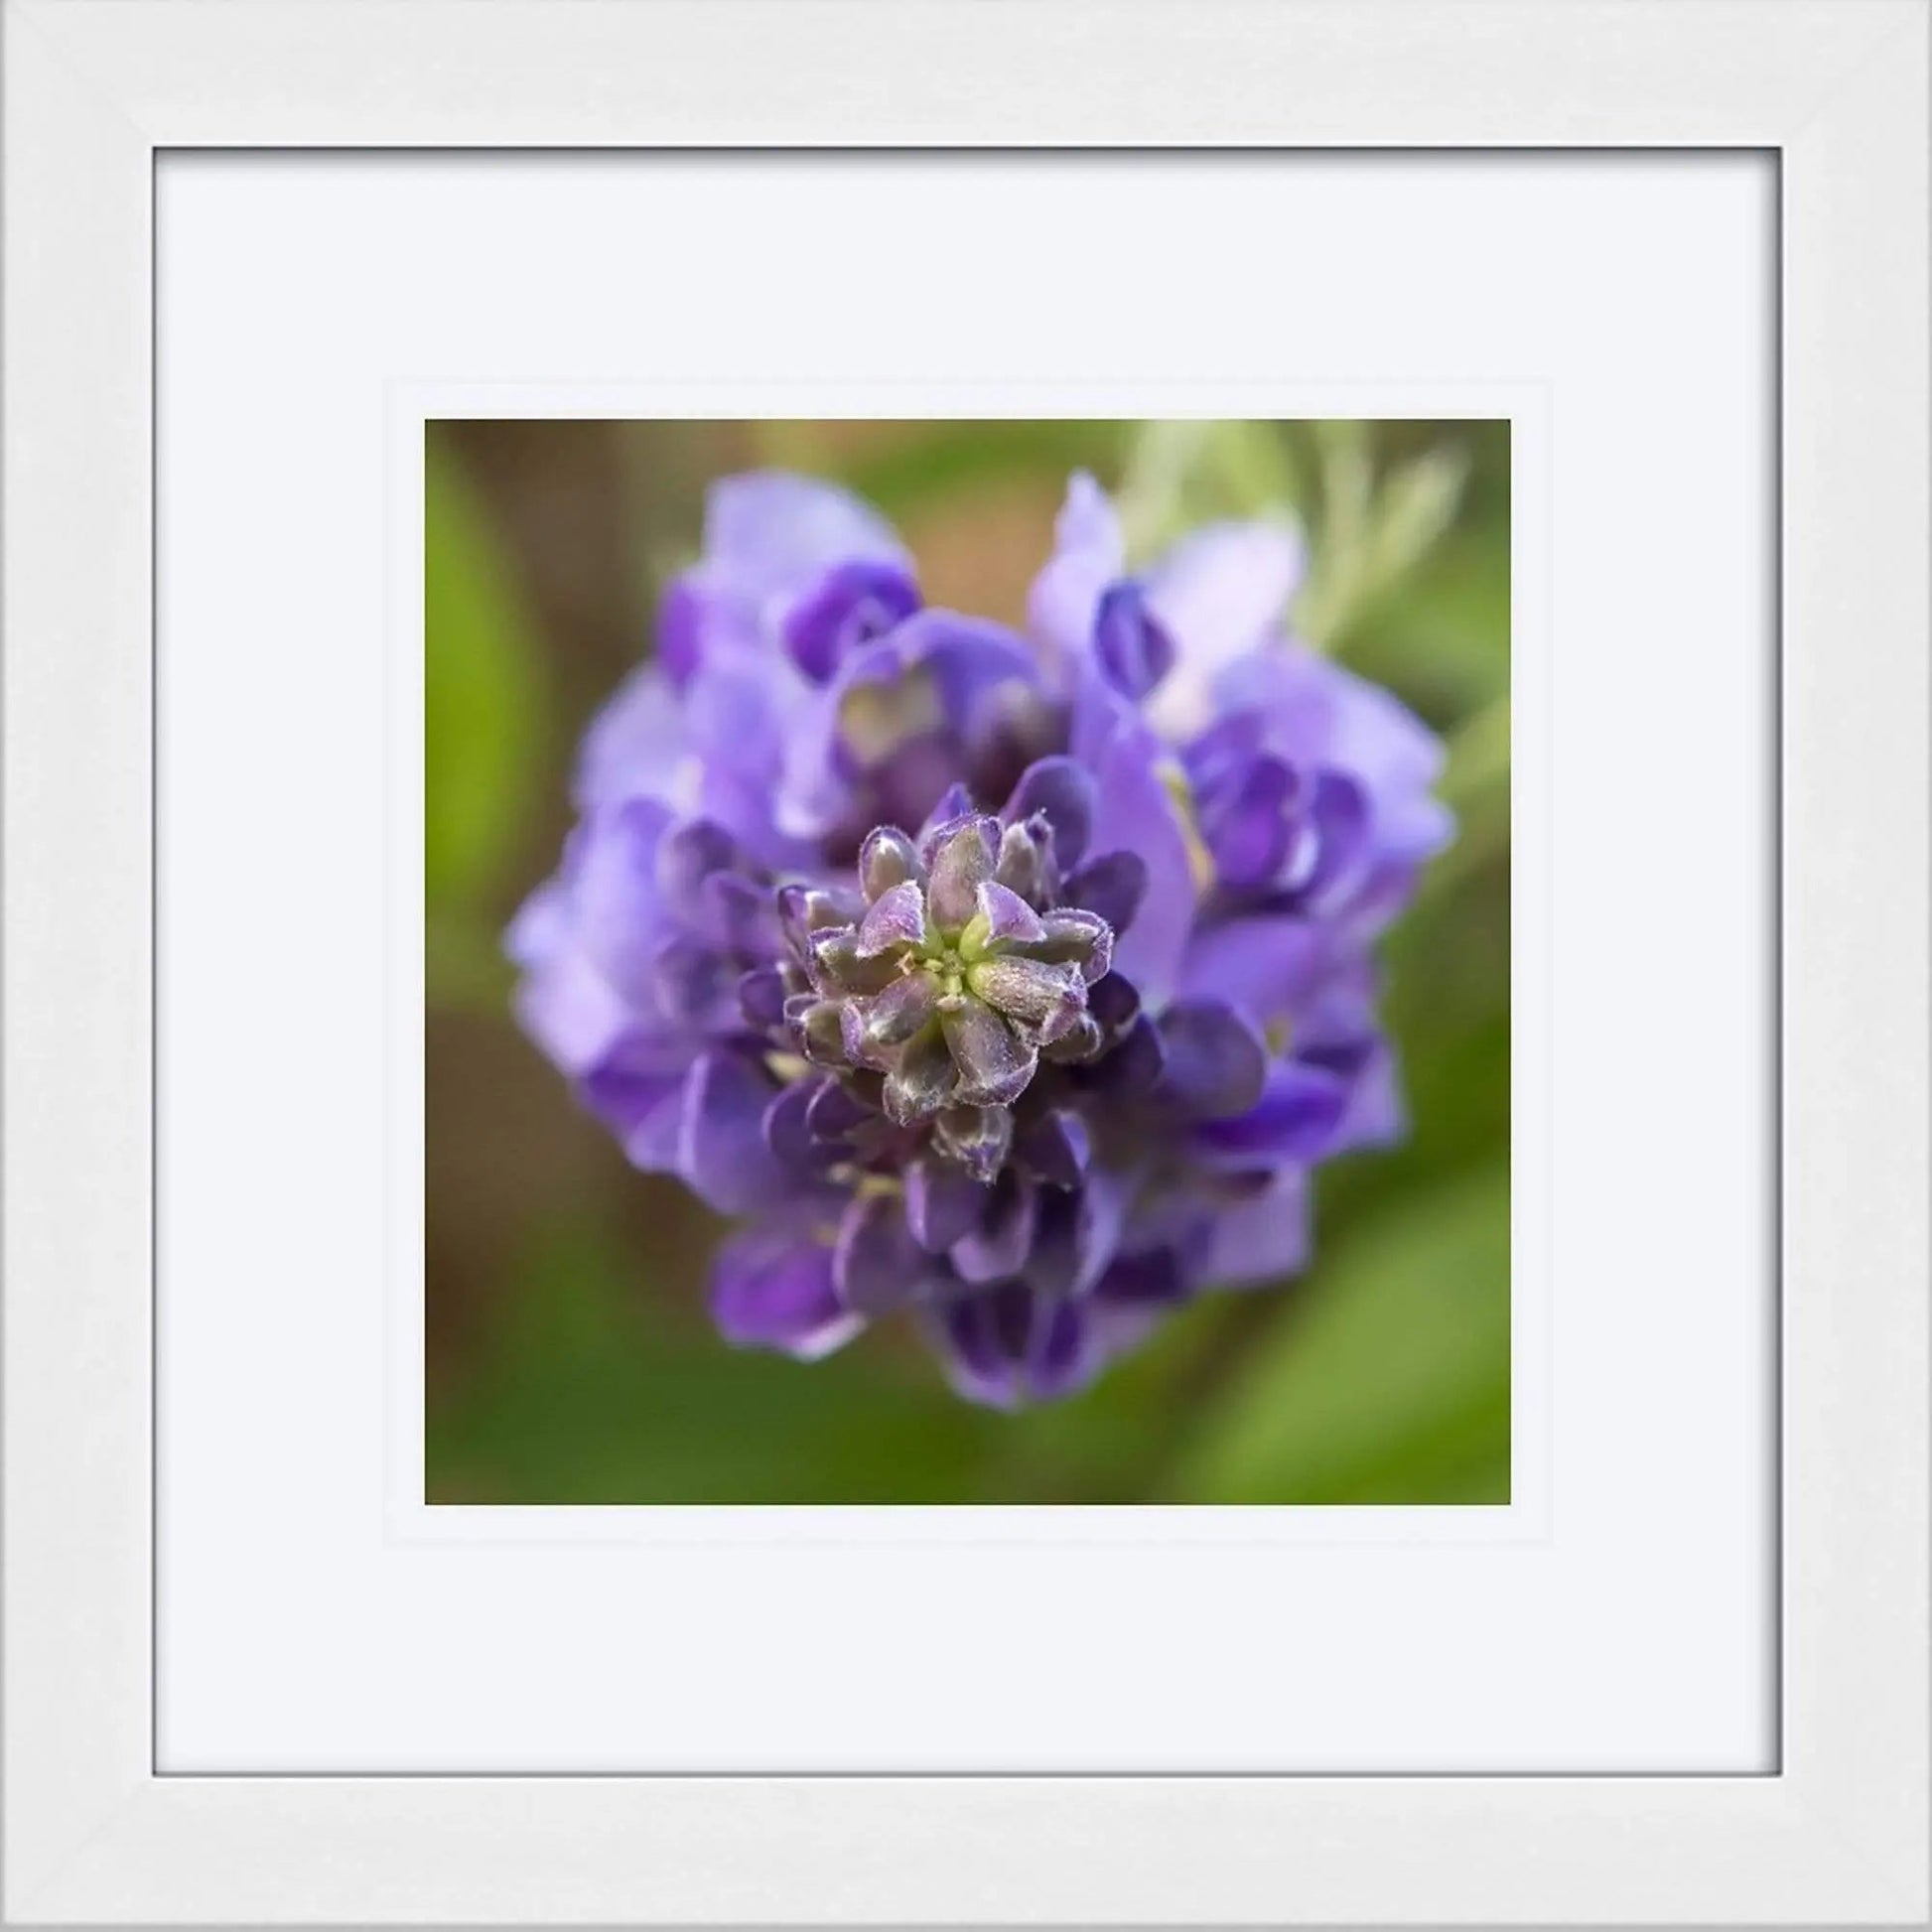 framed art of purple wisteria flower